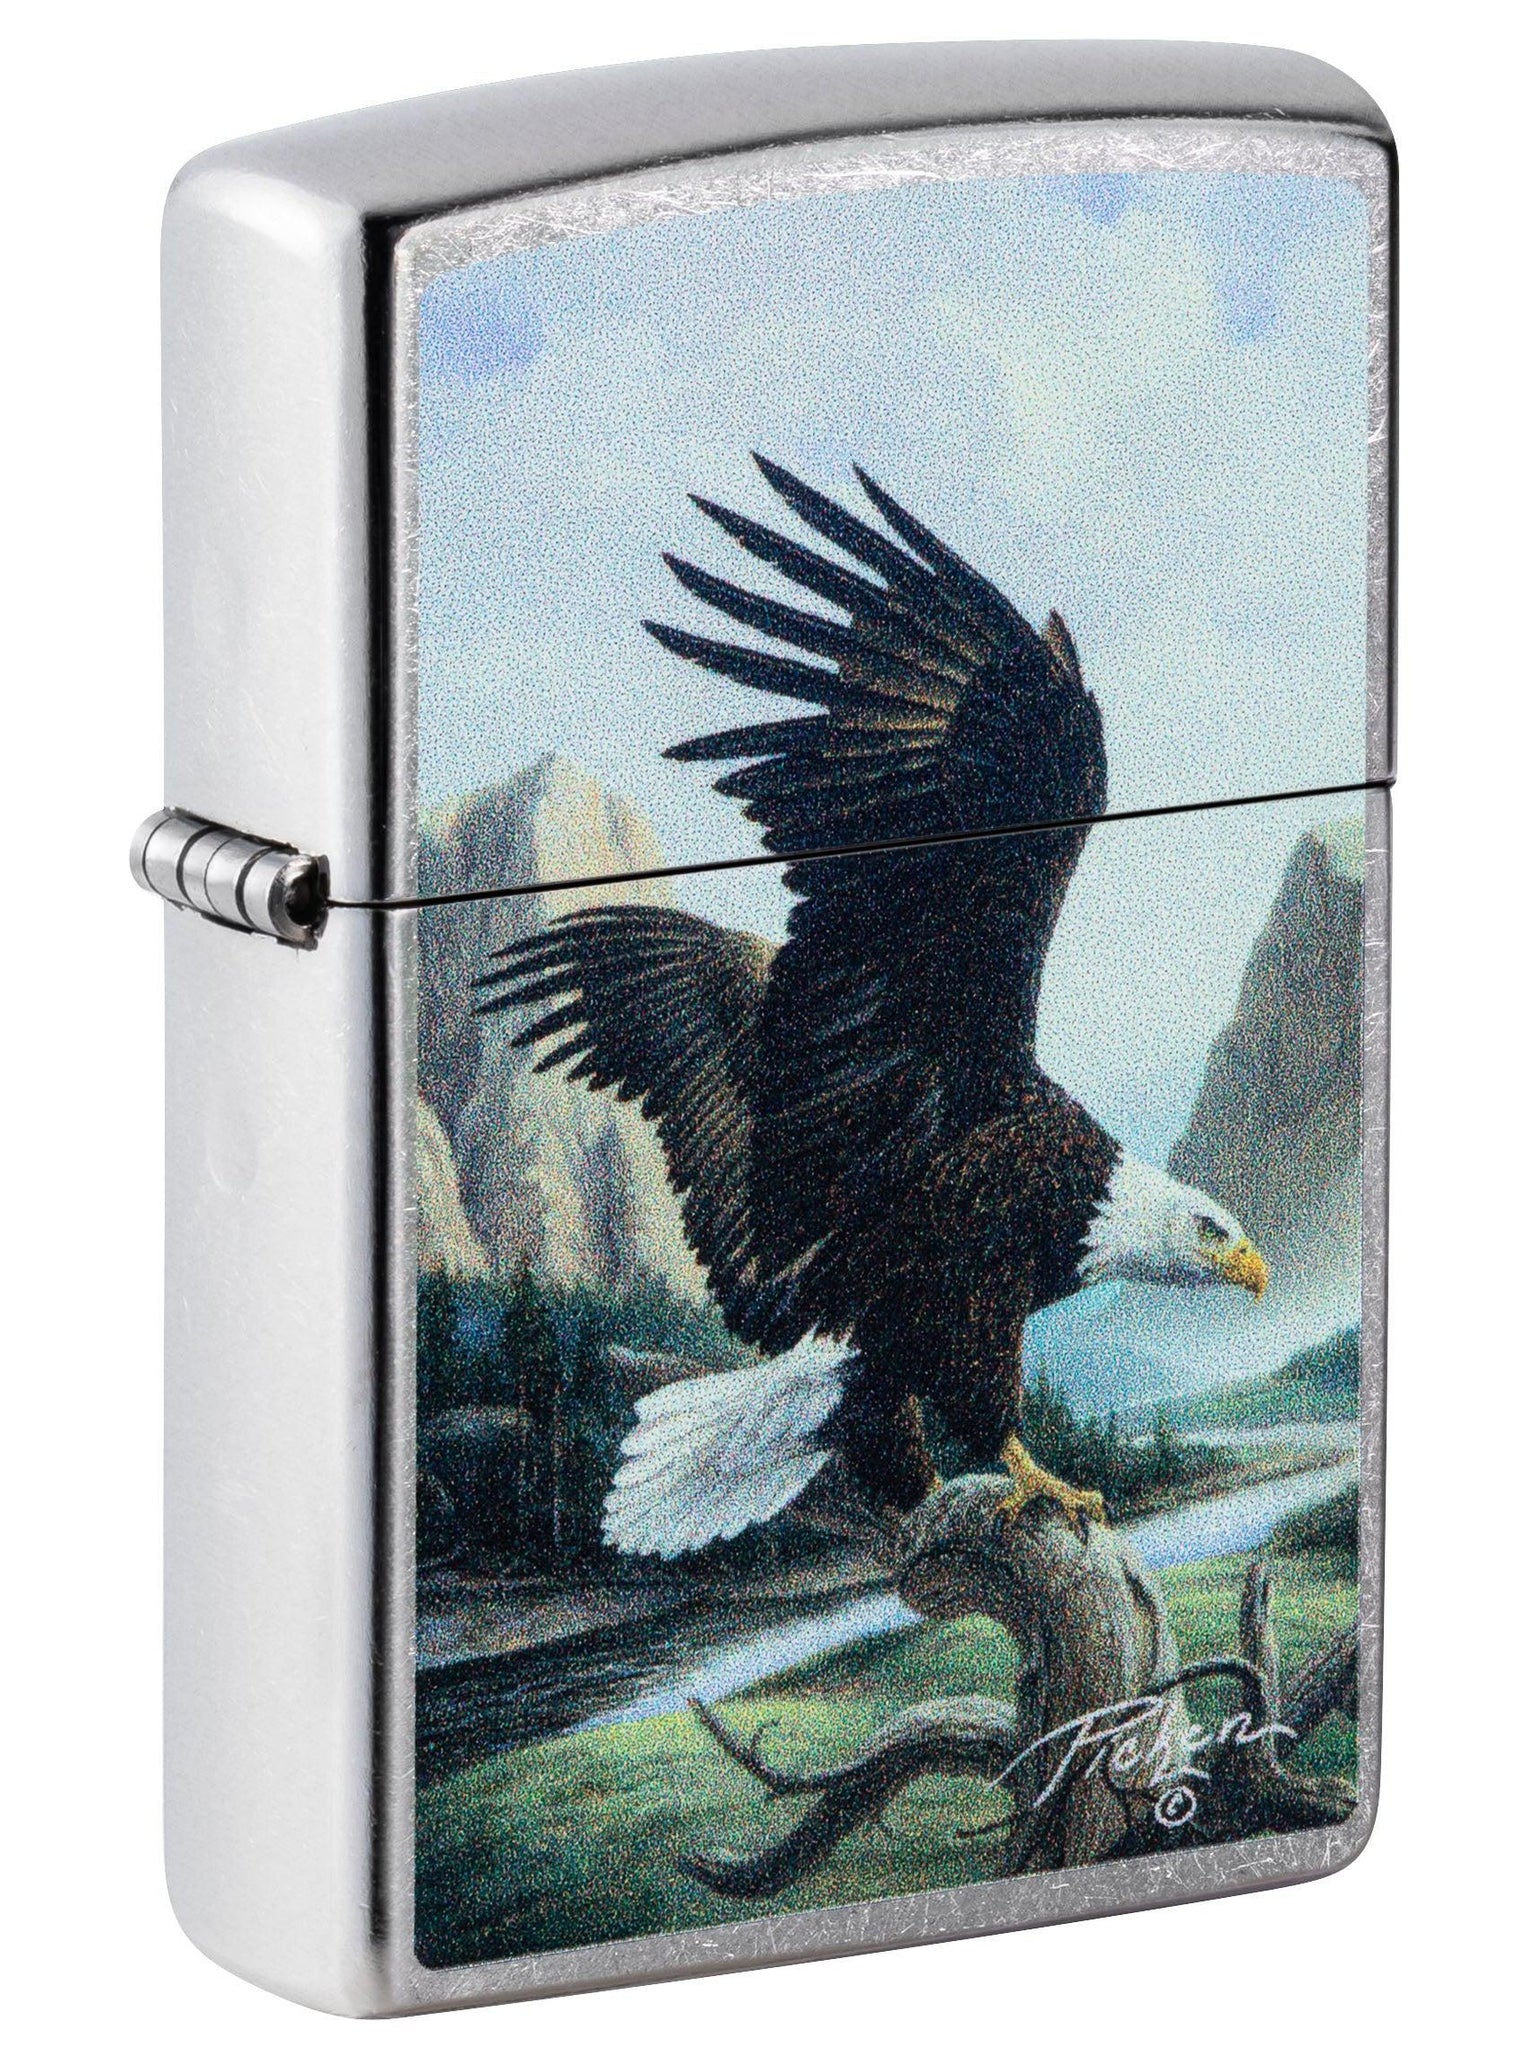 Zippo Lighter: Bald Eagle by Linda Pickens - Street Chrome 49822